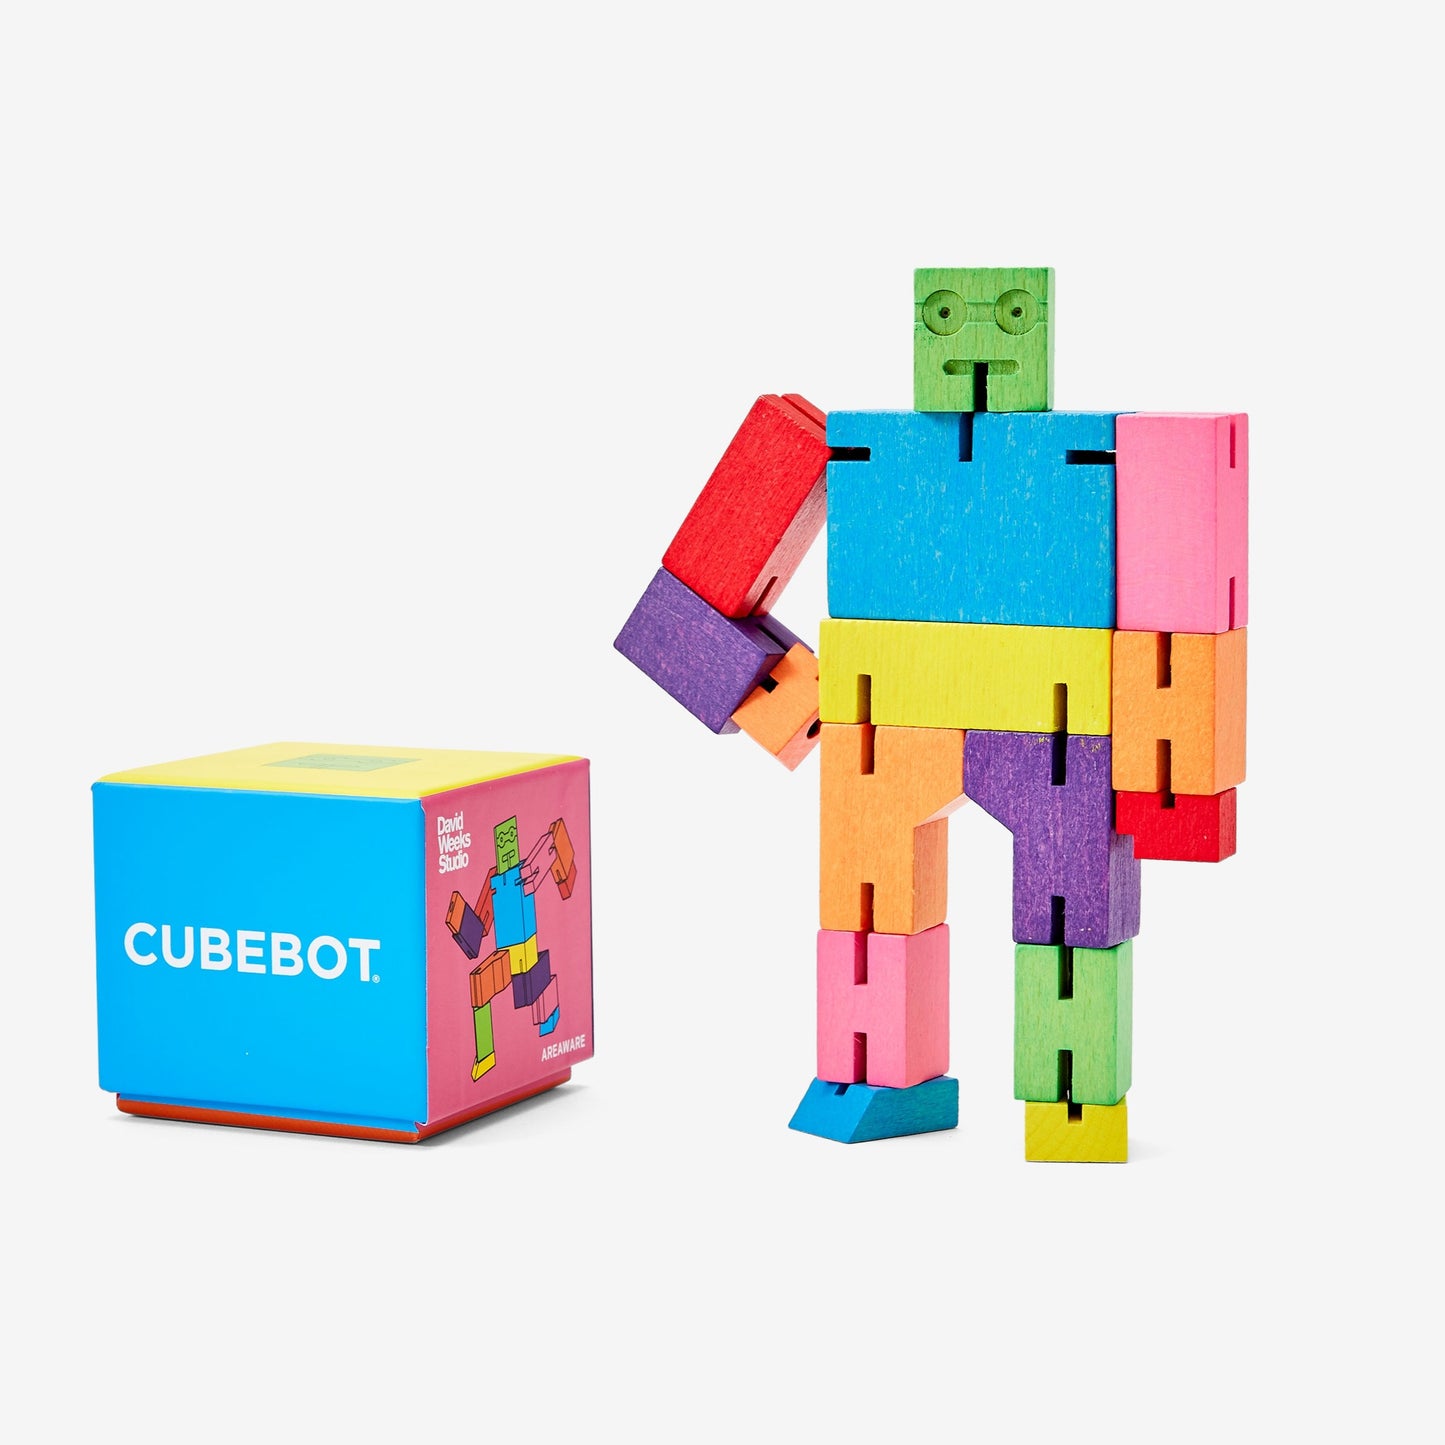 Areaware - David Weeks - Cubebot Small